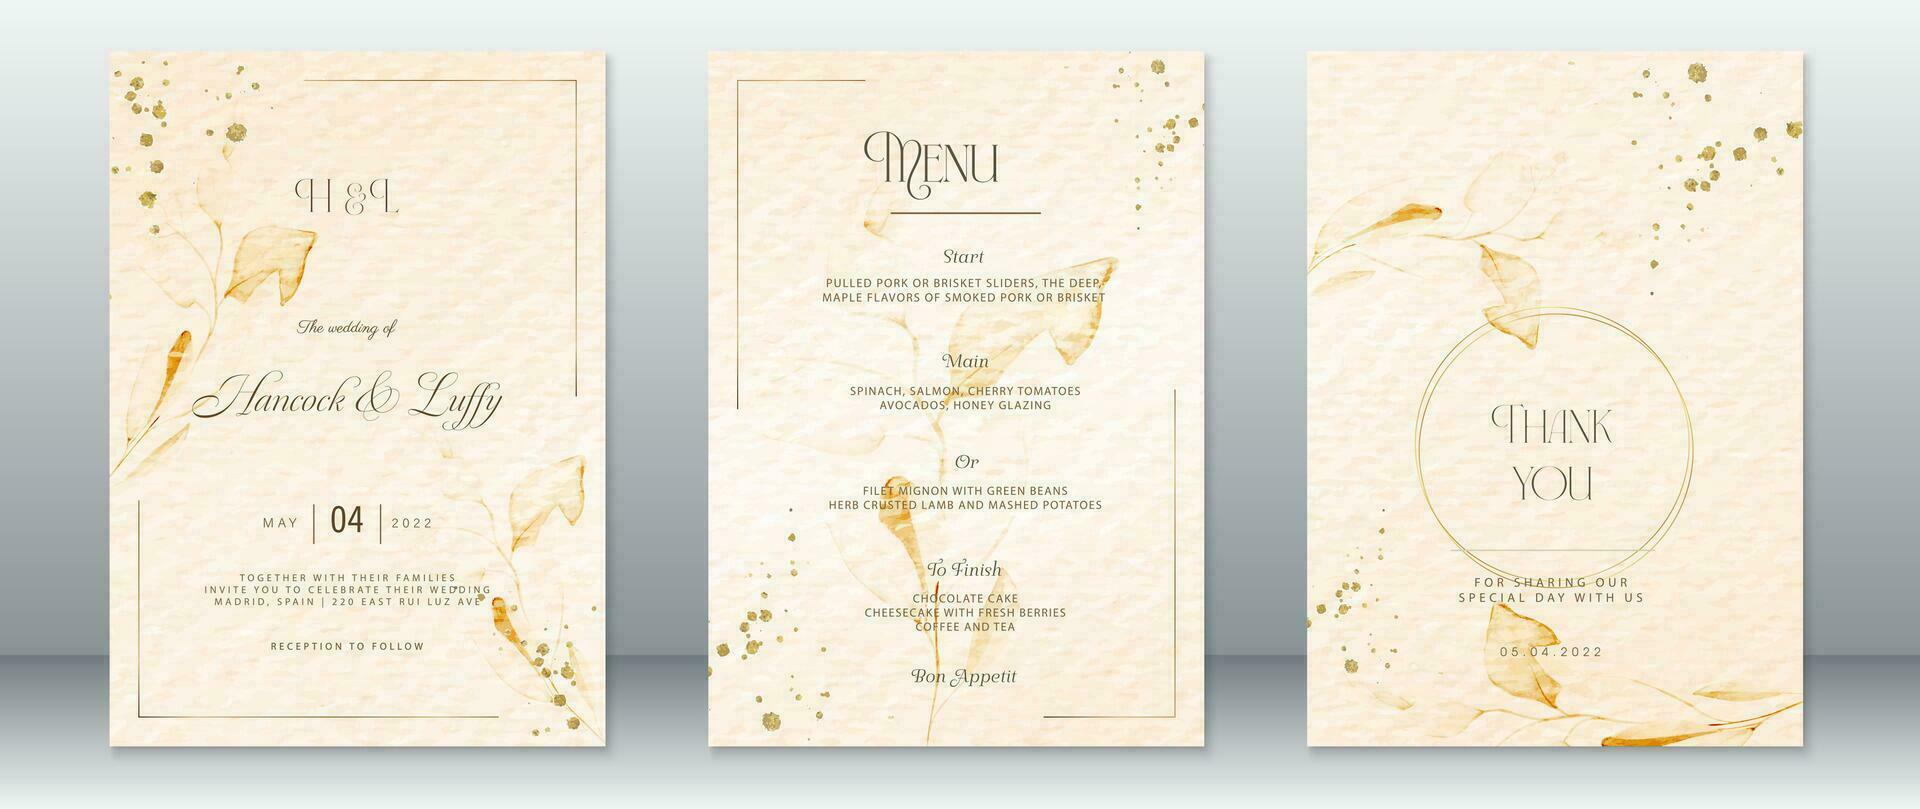 Luxury wedding invitation card template gold design vector